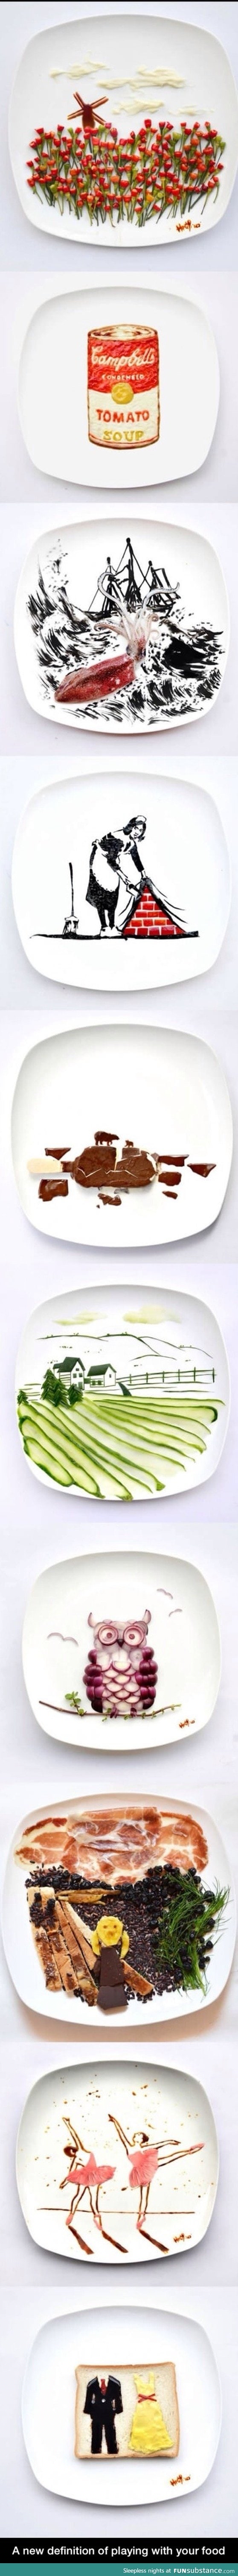 Amazingly Awesome Food Art